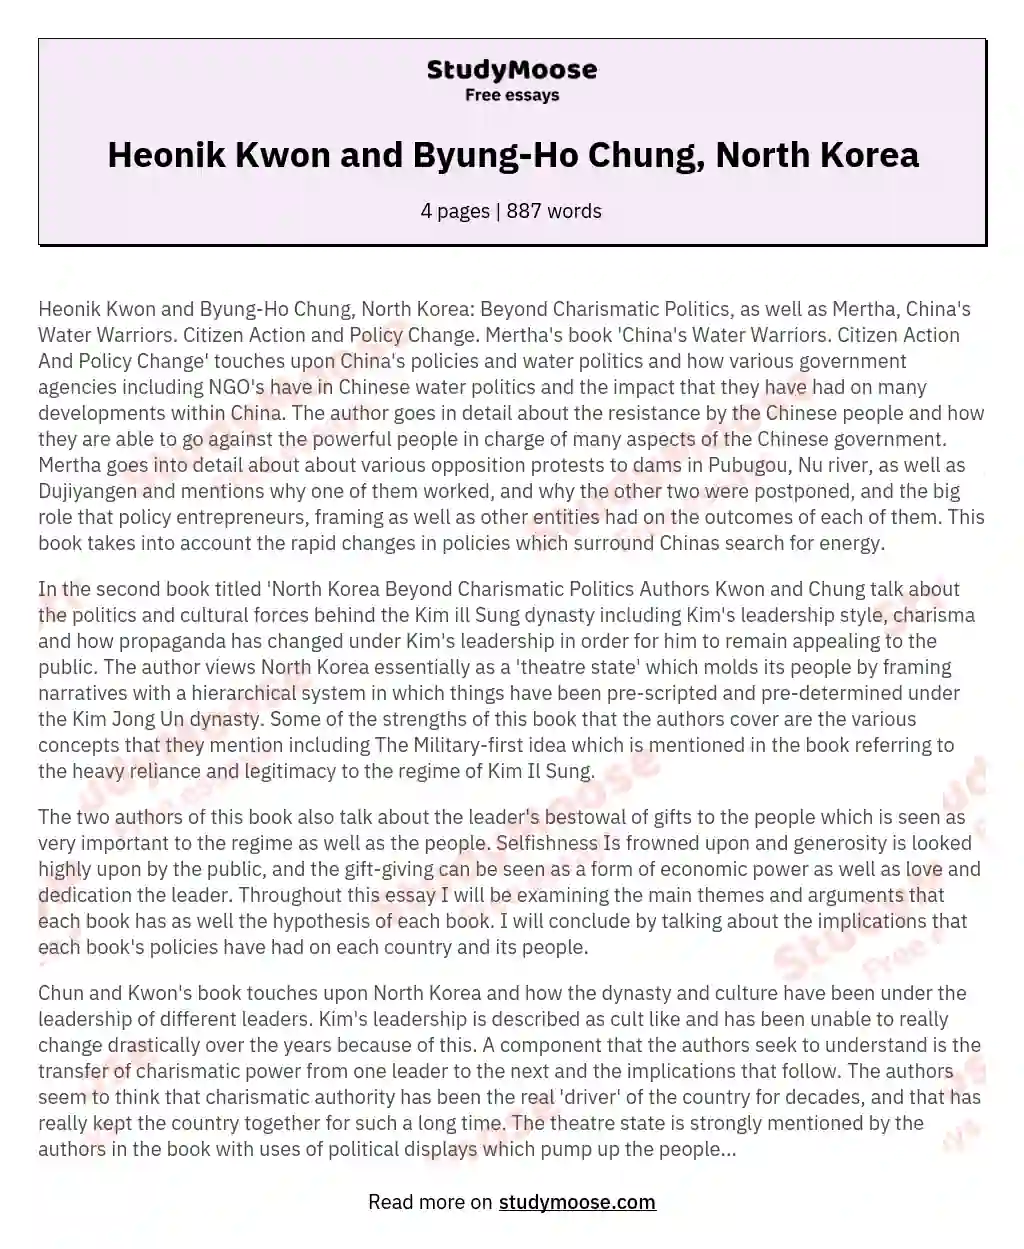 Heonik Kwon and Byung-Ho Chung, North Korea essay